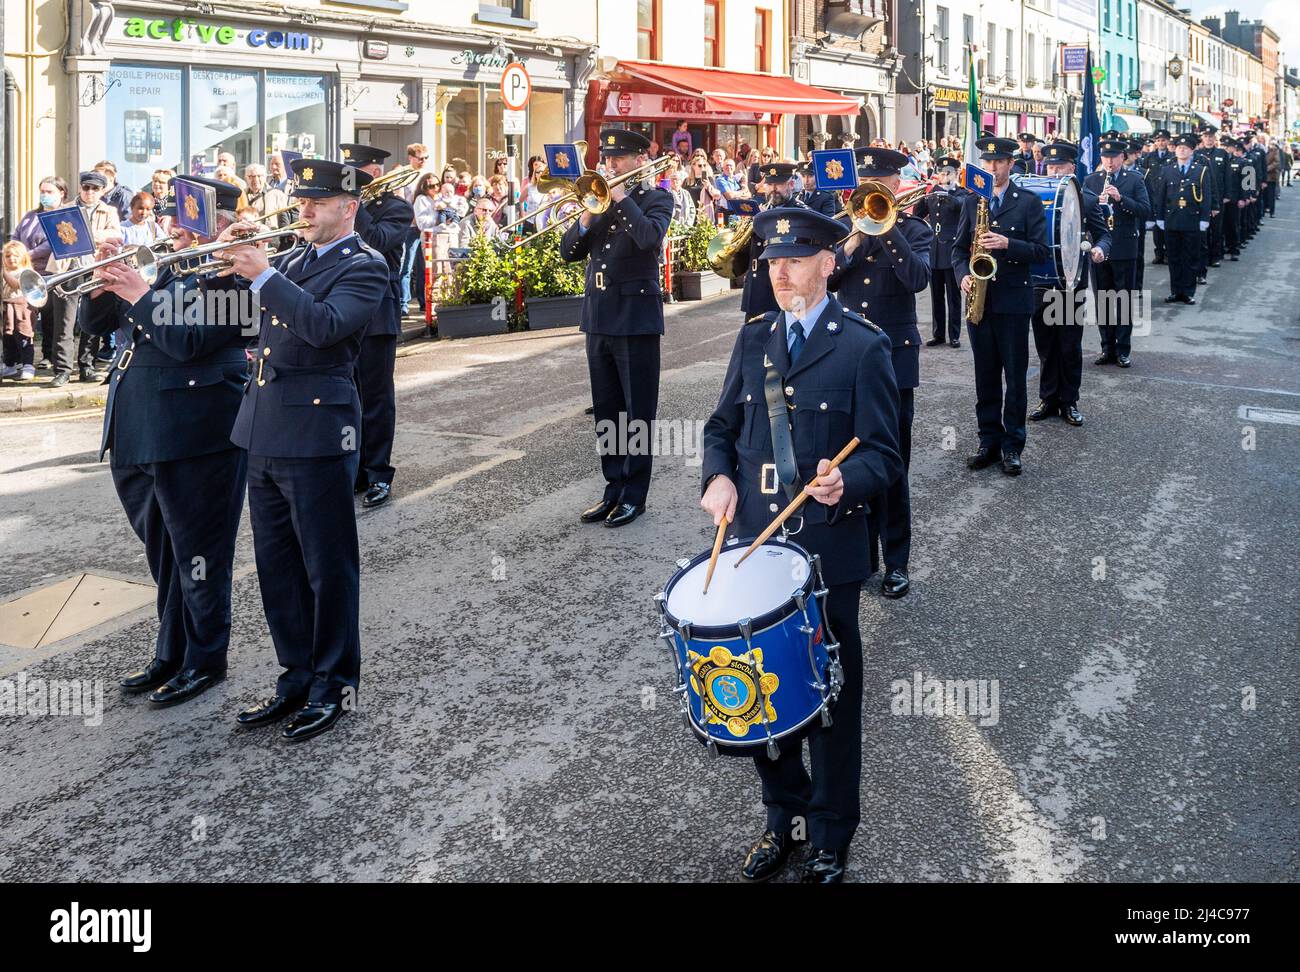 An Garda Síochána (Irish Police Force) band performing at an event in Bandon, West Cork, Ireland. Stock Photo